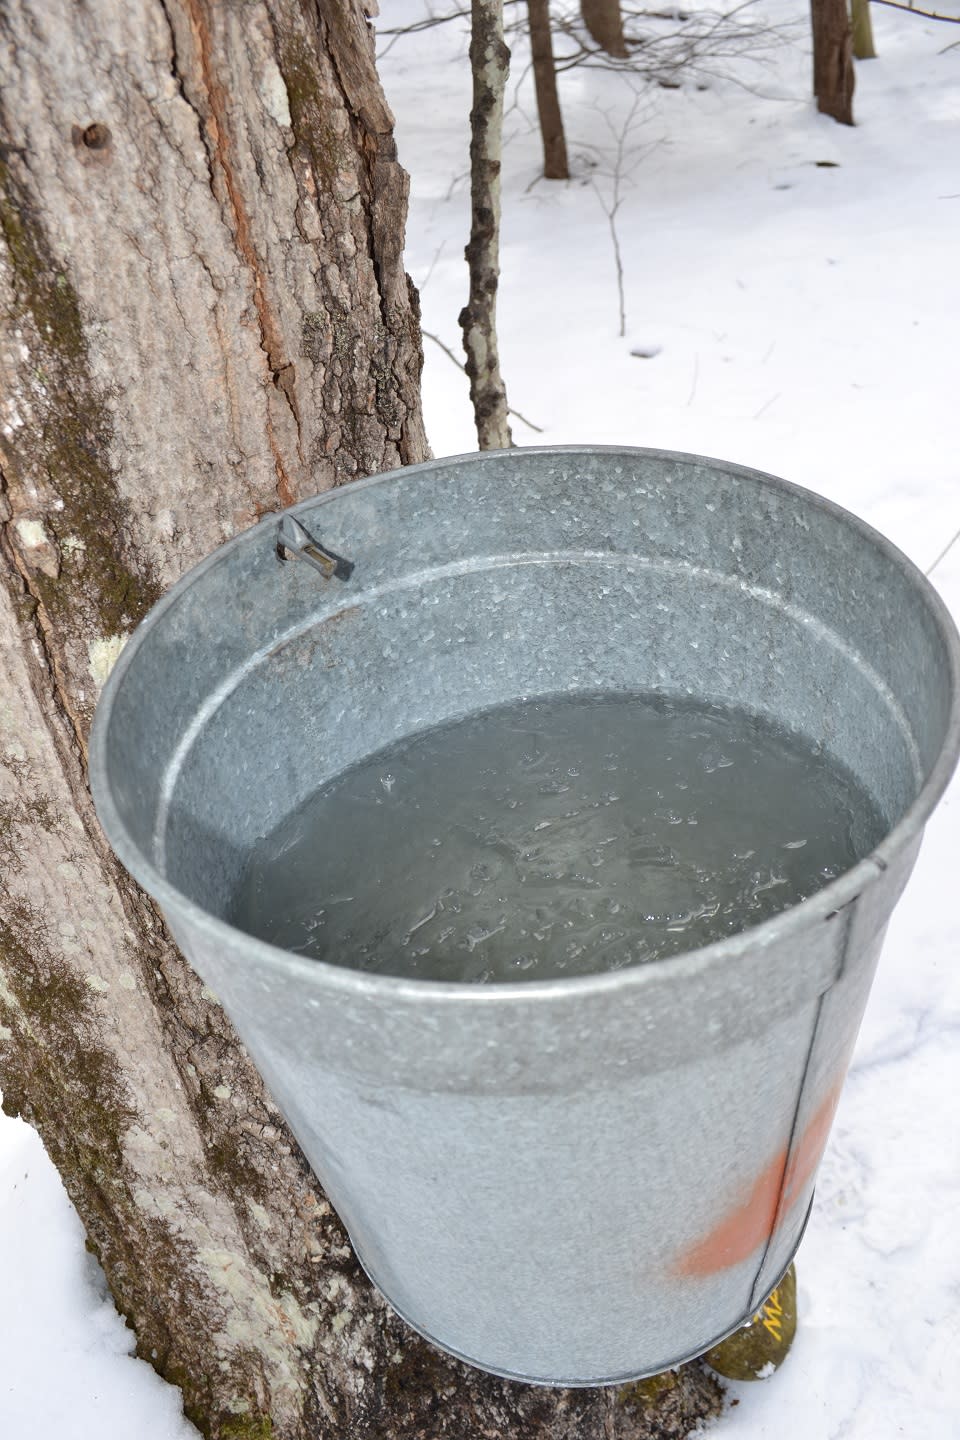 Sugar maple metal bucket full of maple sap at Up Yonda Farm